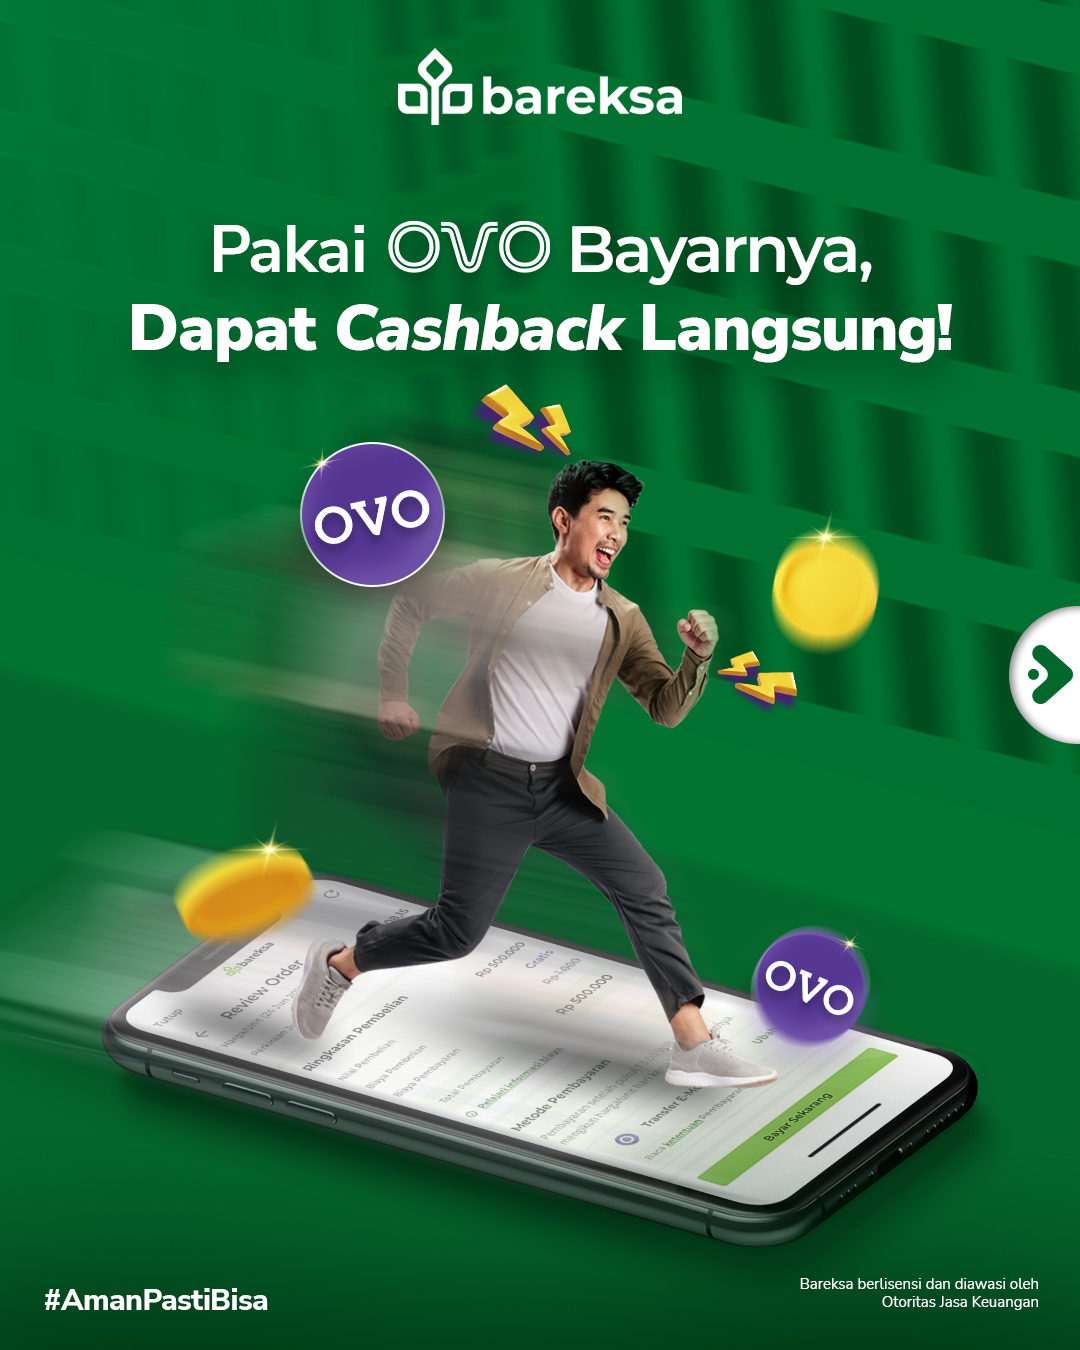 Promo Bareksa OVO Investor Baru dan Setia, Berhadiah Reksadana dan Cashback hingga Rp30 Ribu